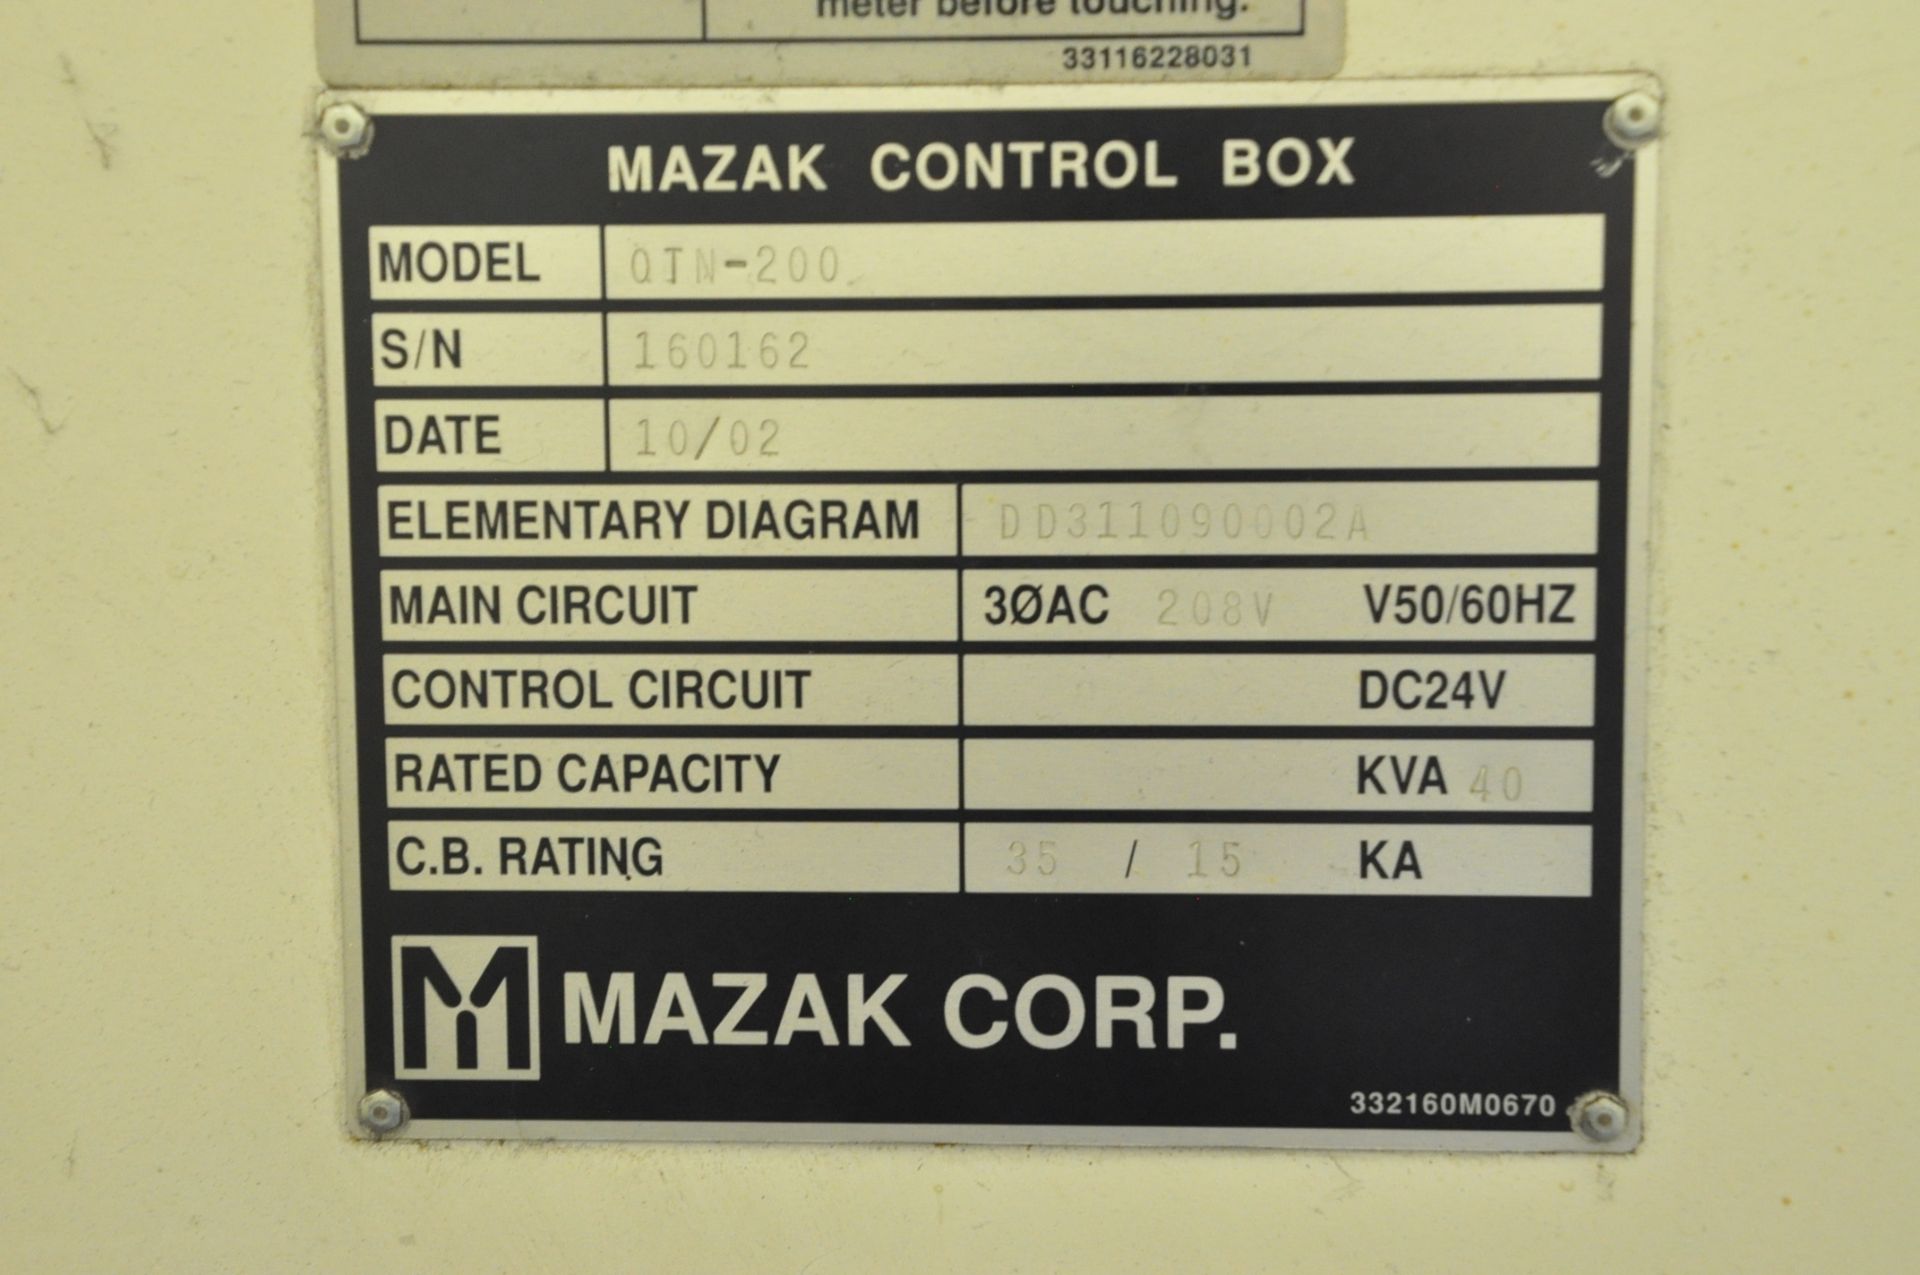 Mazak Nexus QTN-200 CNC Turning Center - Image 9 of 10